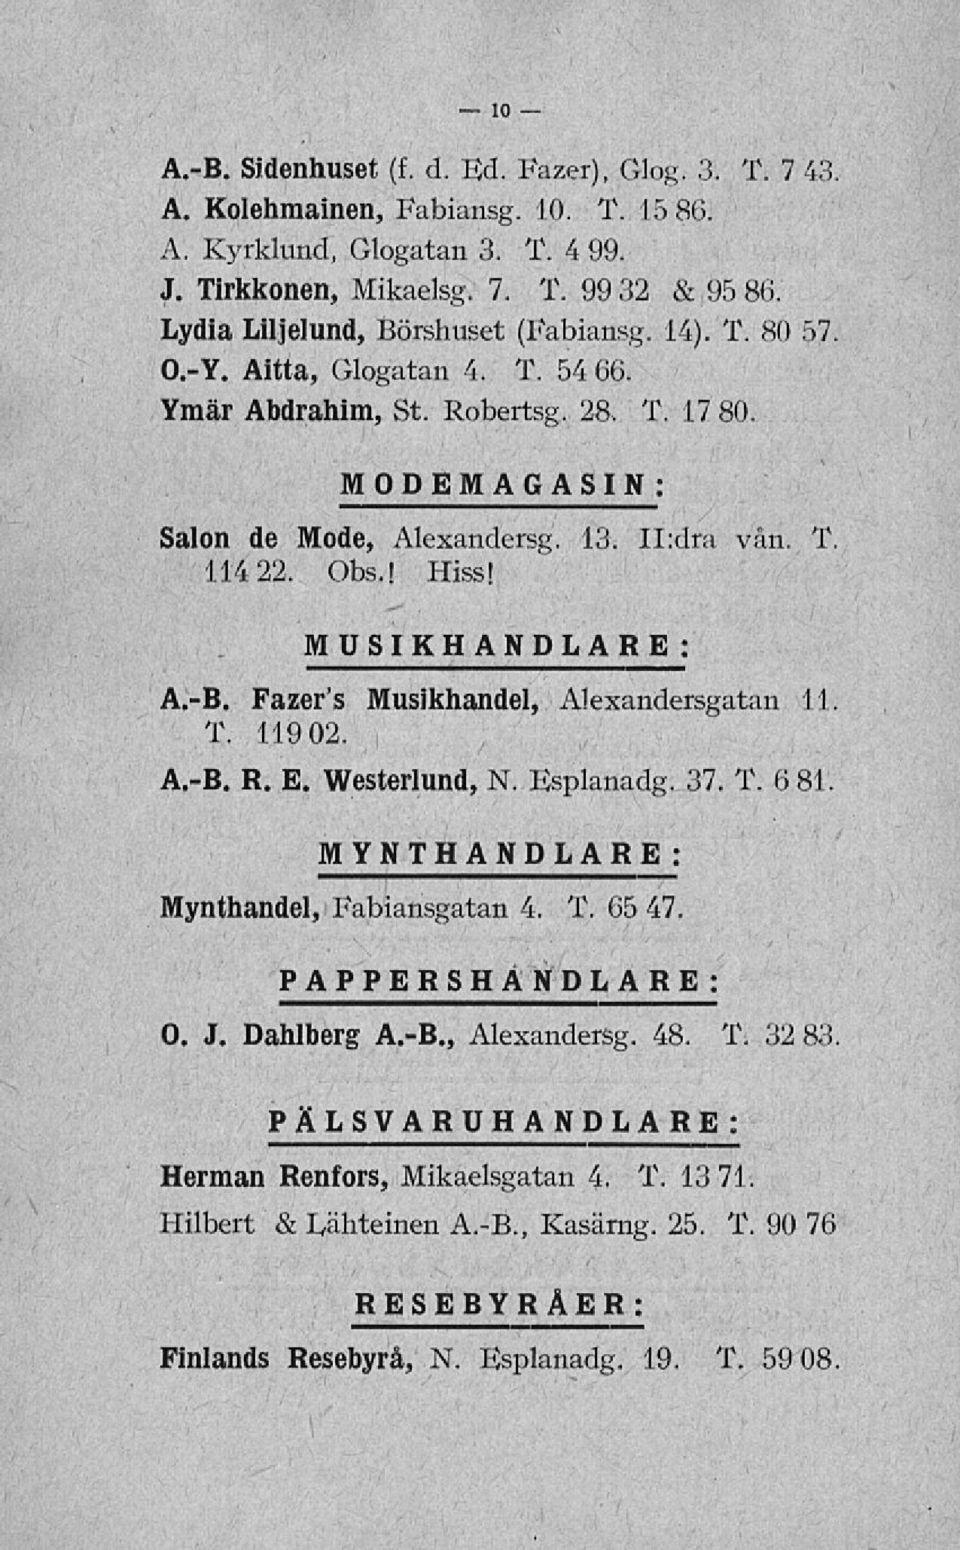 Obs.! Hiss! MUSIKHANDLARE: A.-B. Fazer's Musikhandel, Alexandersgatan 11 T. 11902. A.-B. R. E. Westerlund, N. Esplanadg. 37. T. 6 81. MYNTHANDLARE Mynthandel, Fabiansgatan 4. T. 65 47.